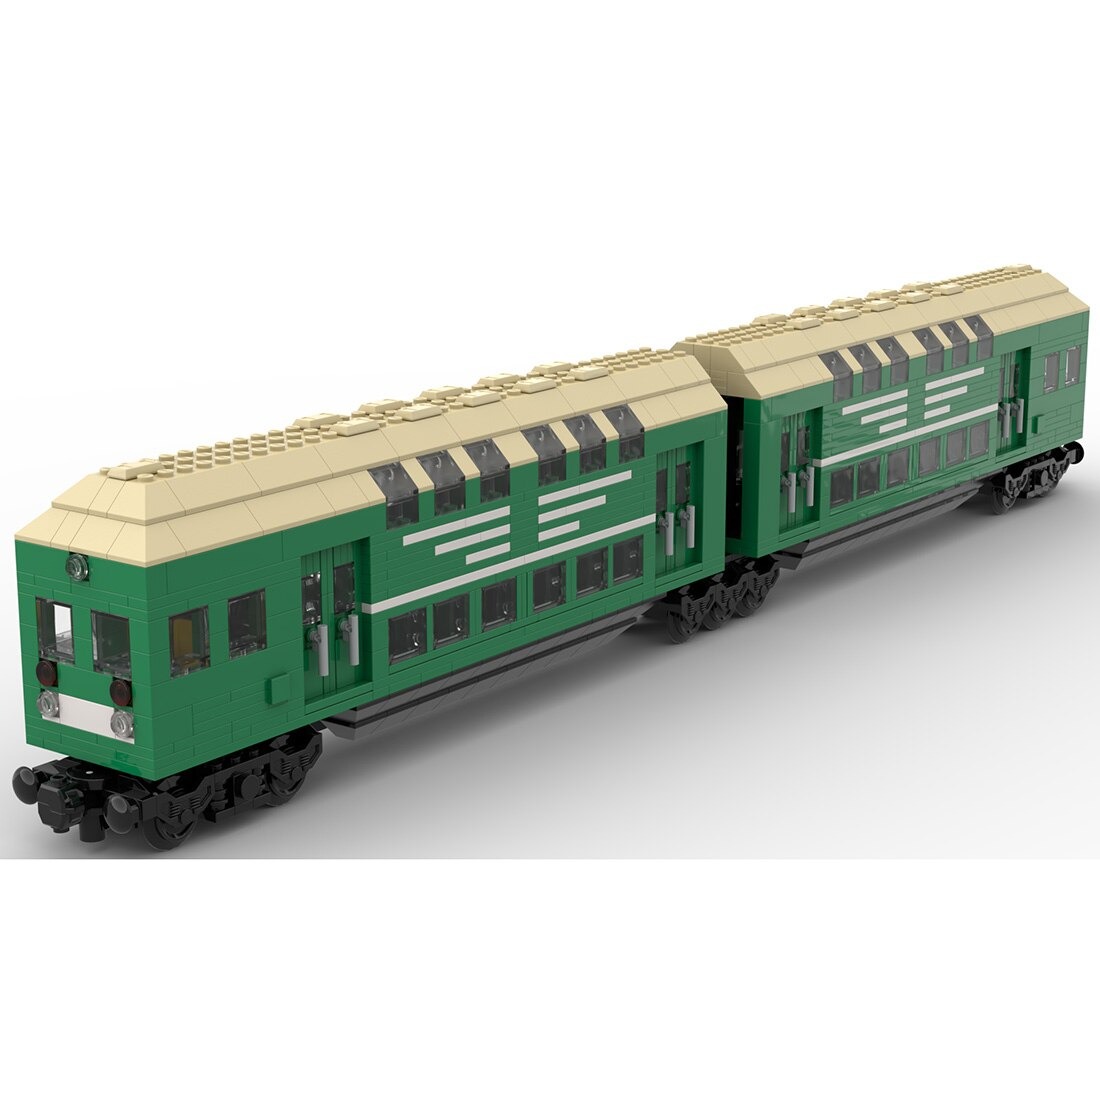 authorized moc 109281 7 axle train carri main 5 2 - ZHEGAO Block